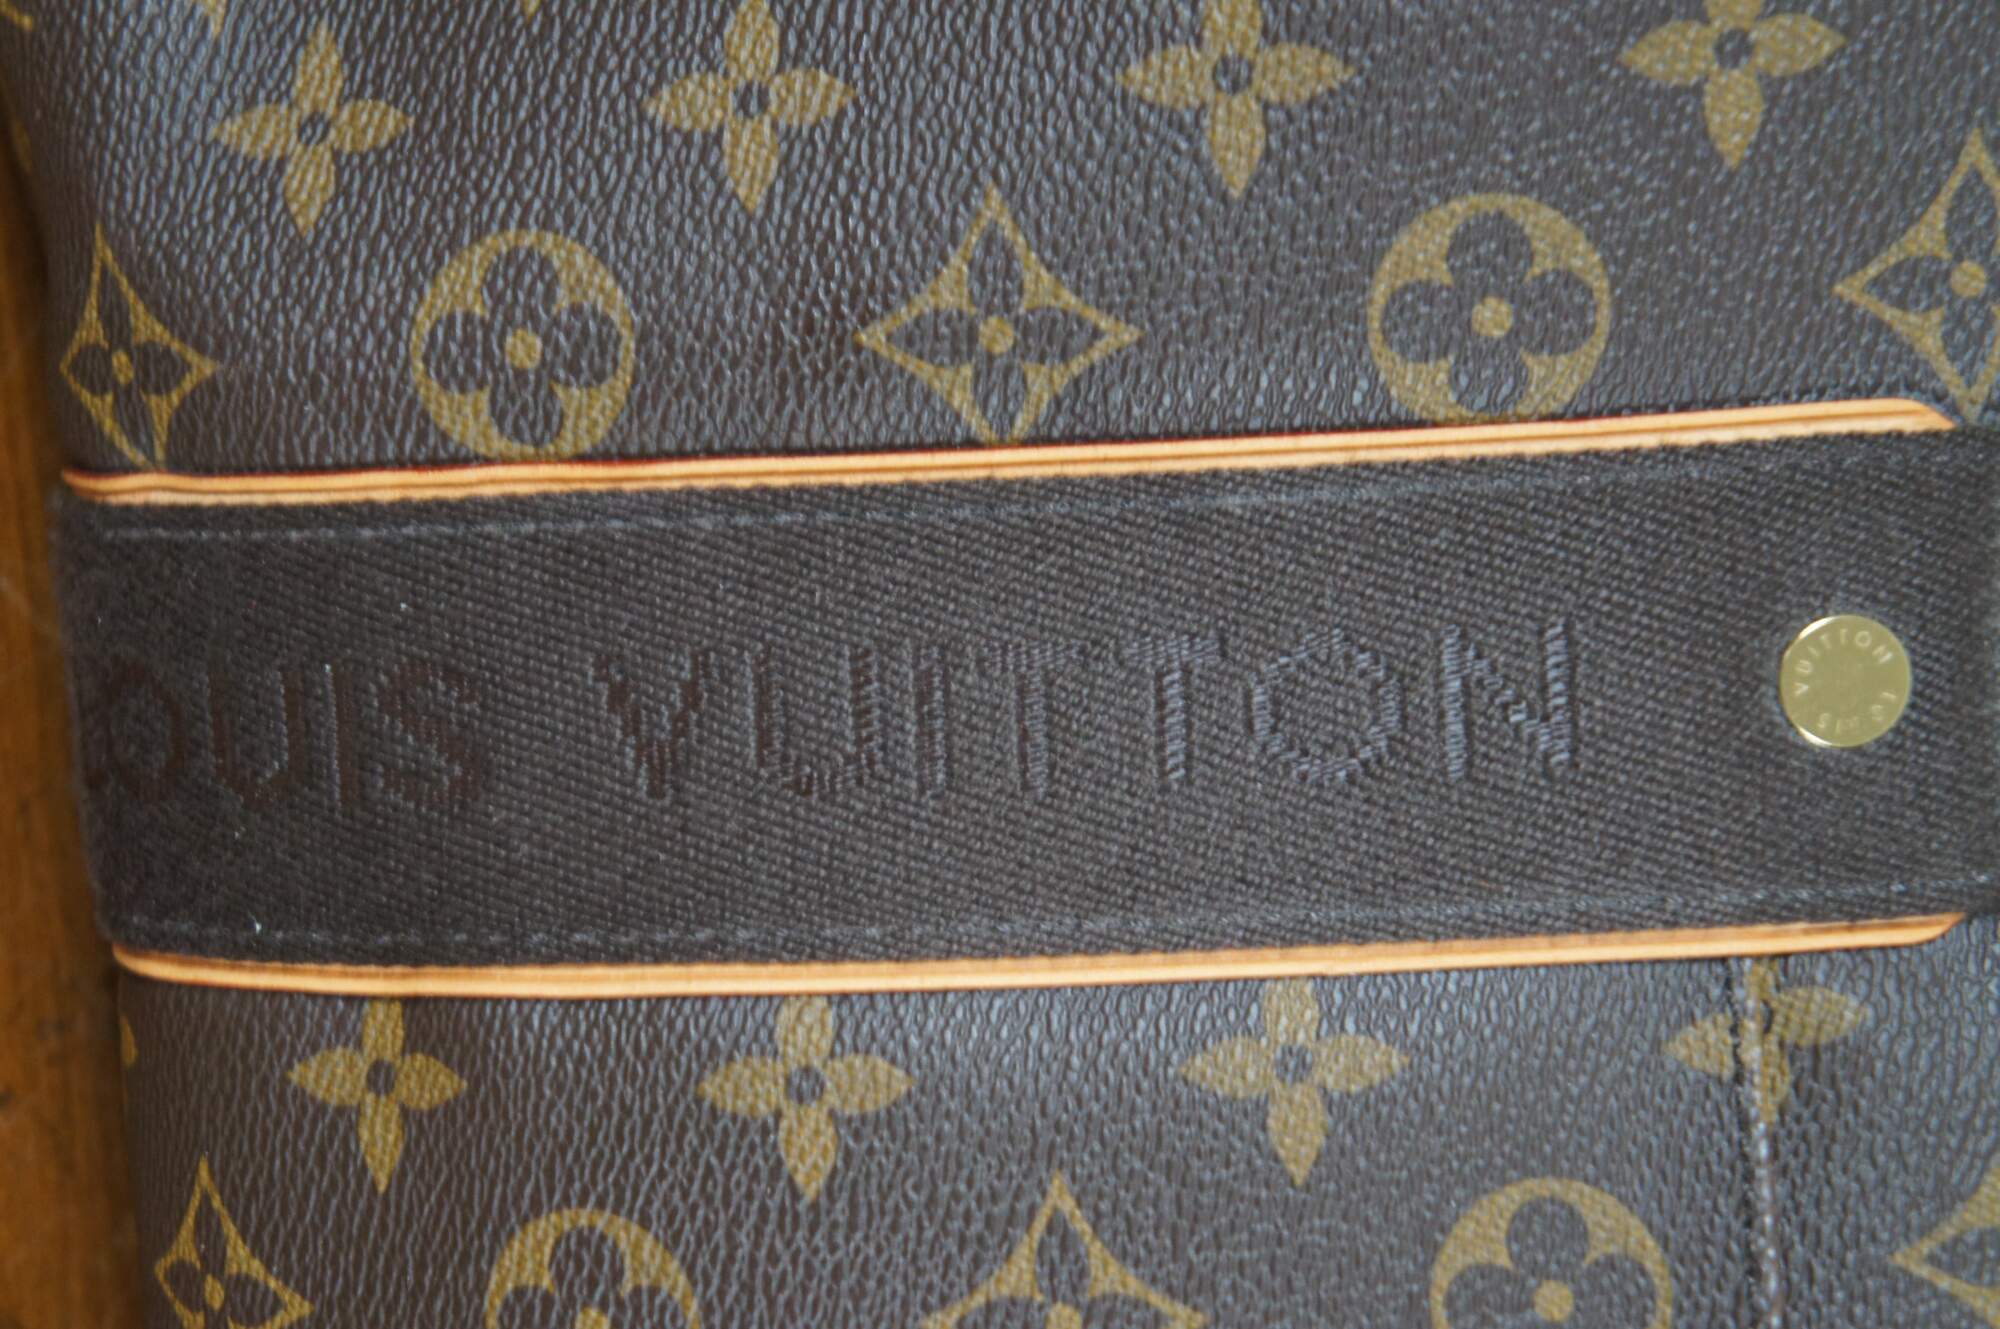 Mala de Mão Louis Vuitton Weekender Beaubourg GM Monogram Original - MUH1